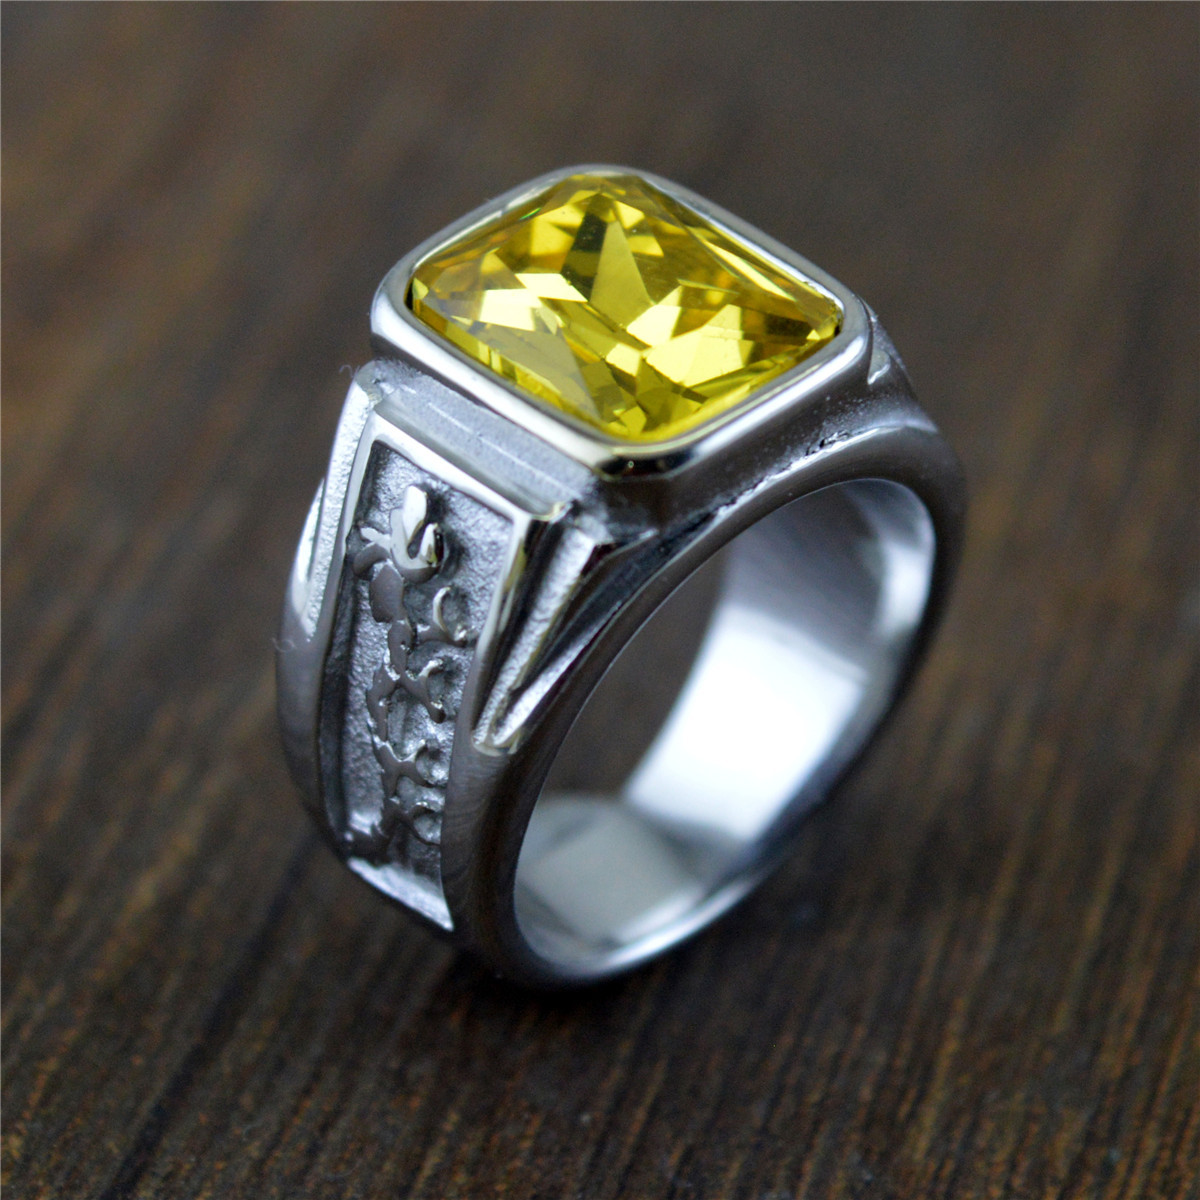 2:Steel yellow diamond